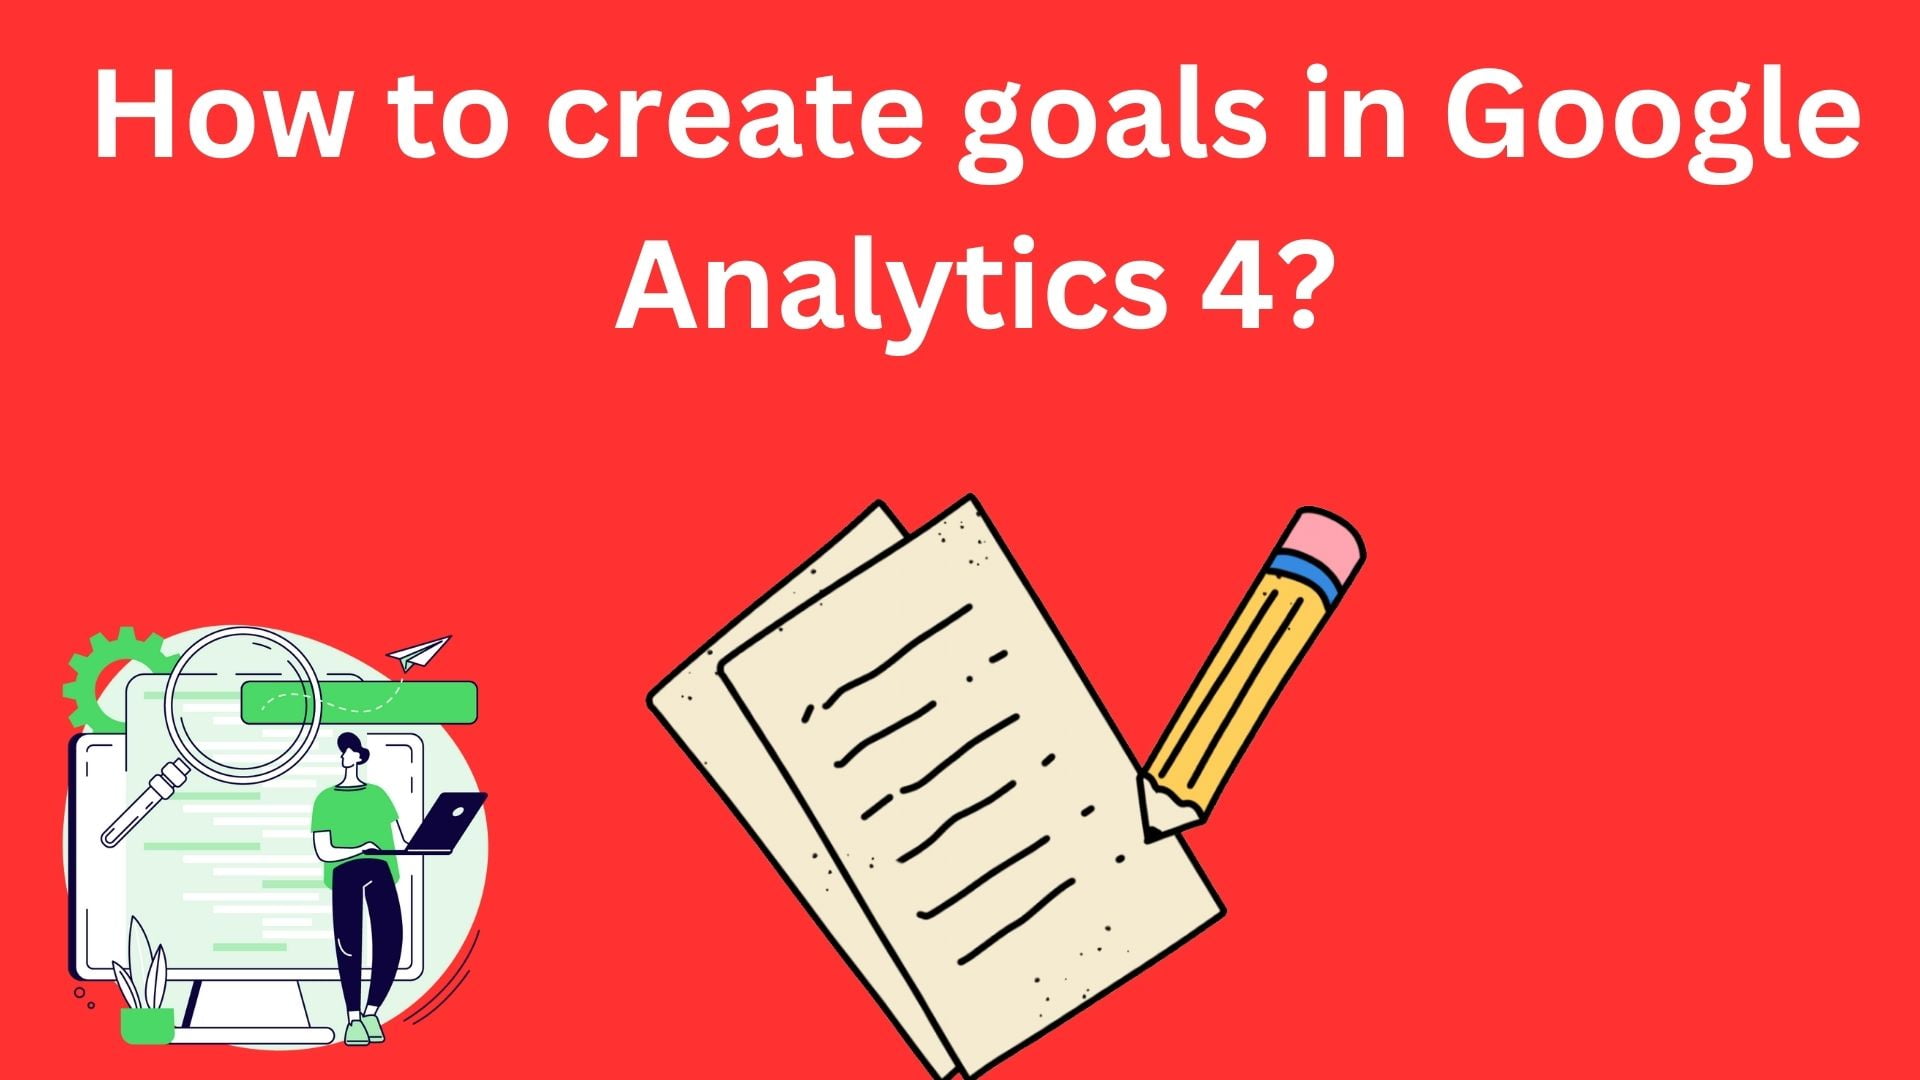 How To Create Goals In Google Analytics 4?